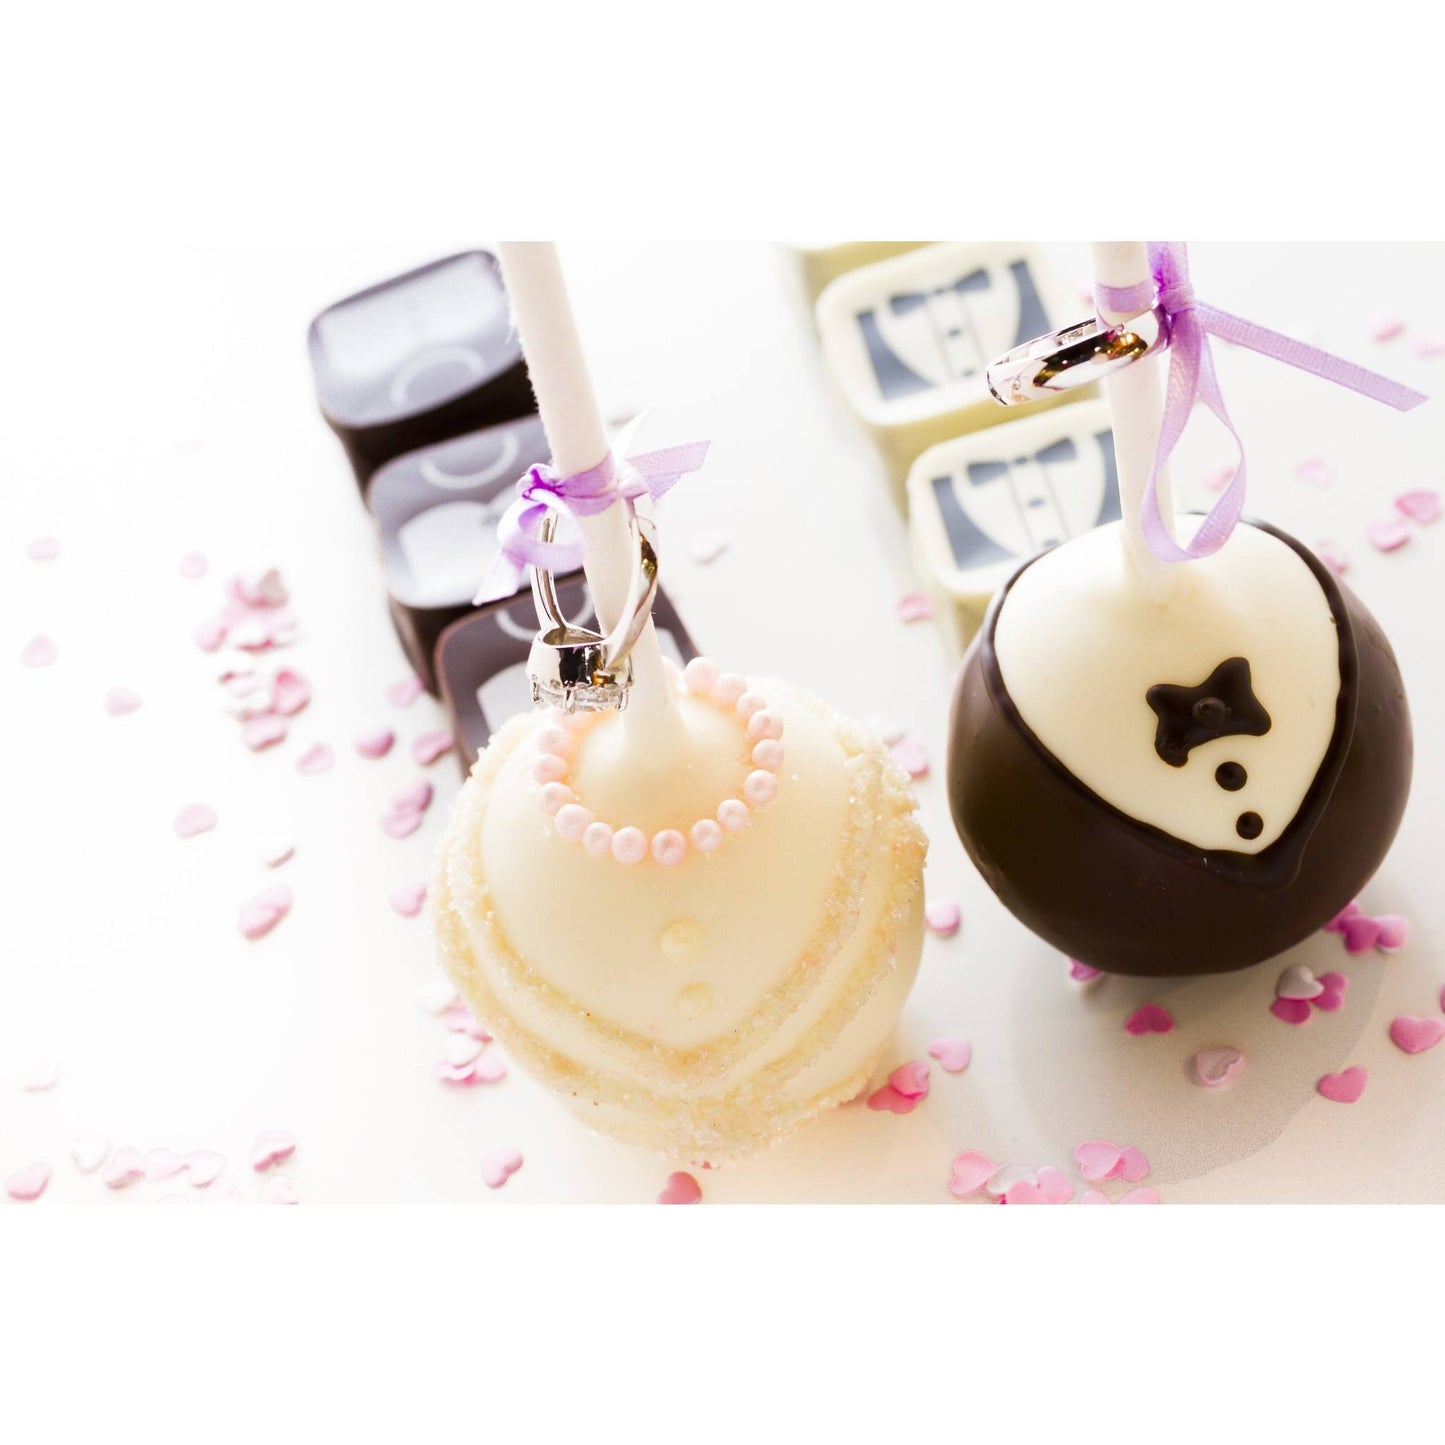 Buy Bride And Groom Wedding Cake Pops - Cake Pops Parties